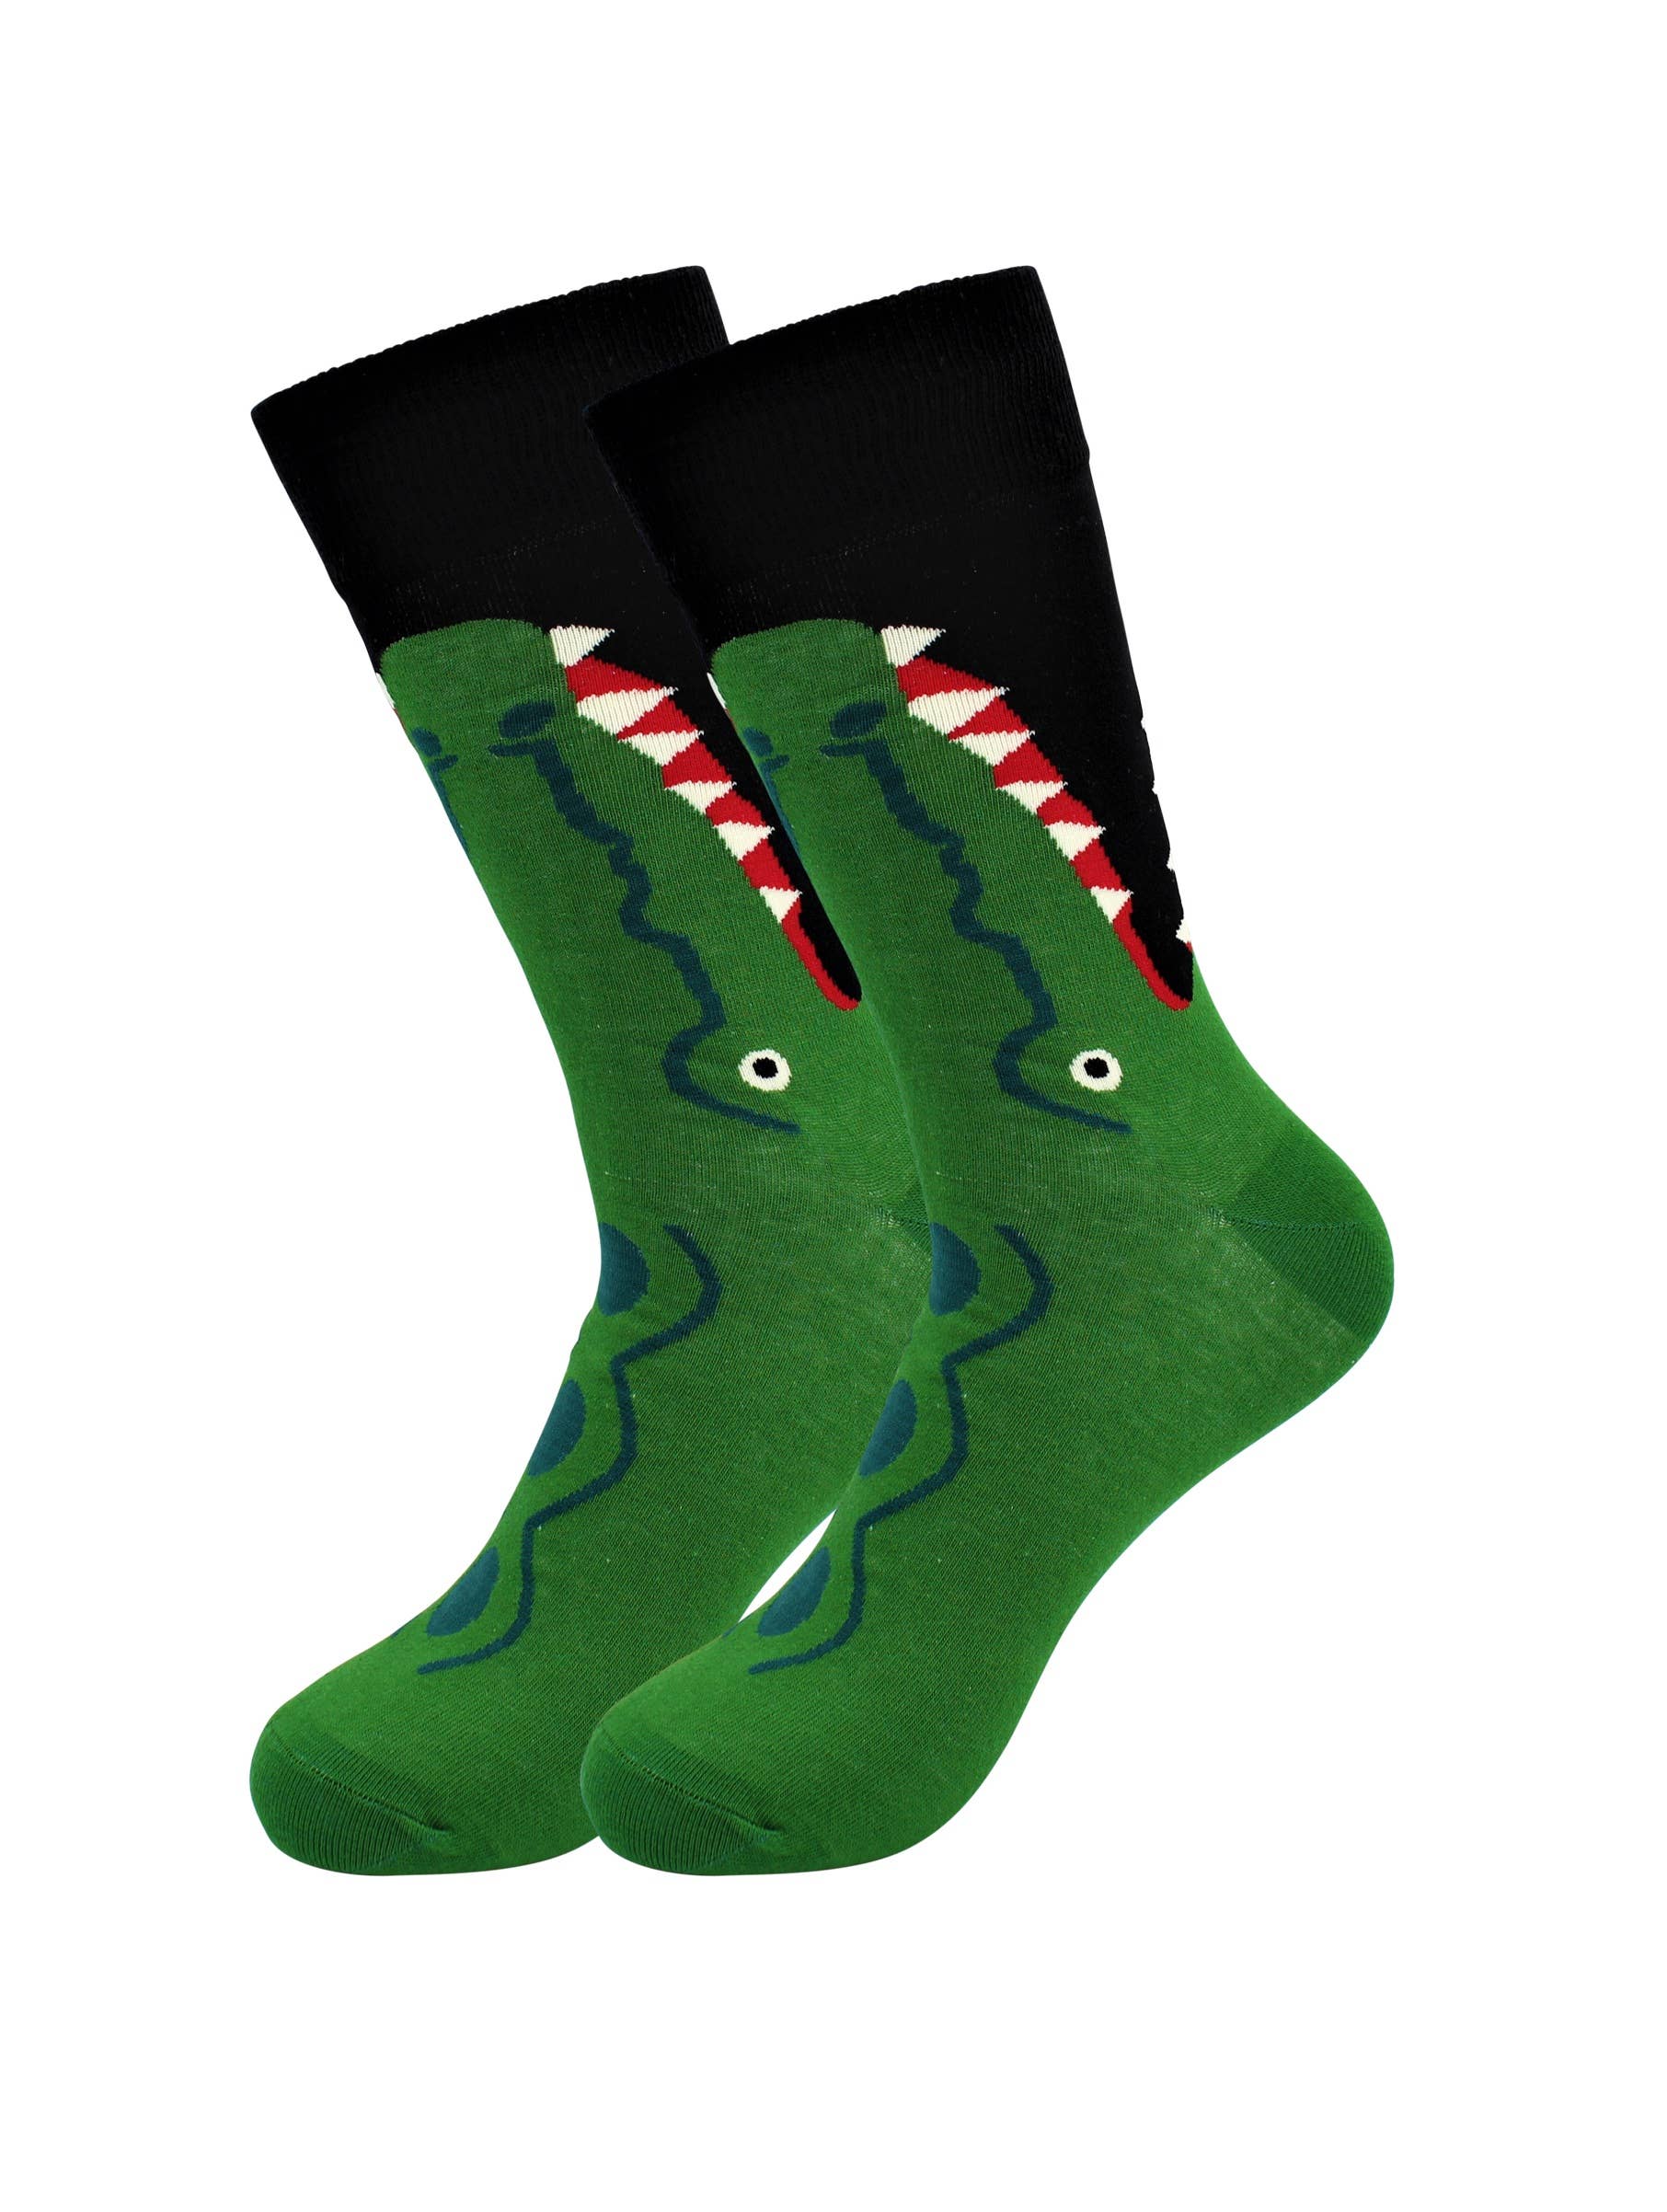 Image of Real Sic Crocodile Animal Socks - Shark, Dragon, Crocodile, Beatles Fun Socks